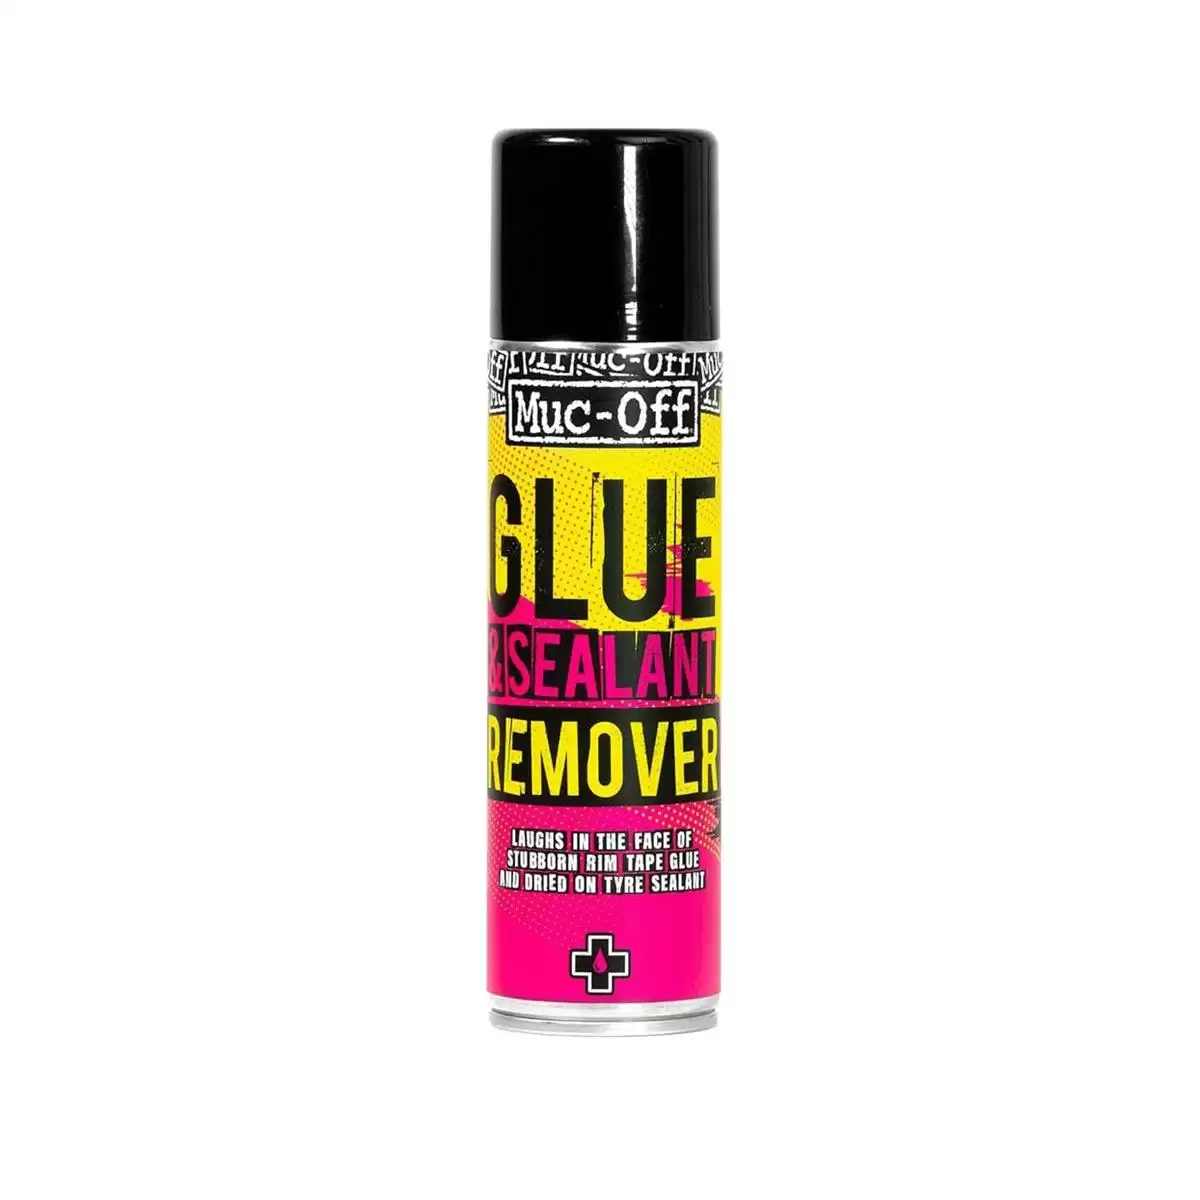 Glue e sealant remover spray 200ml - image